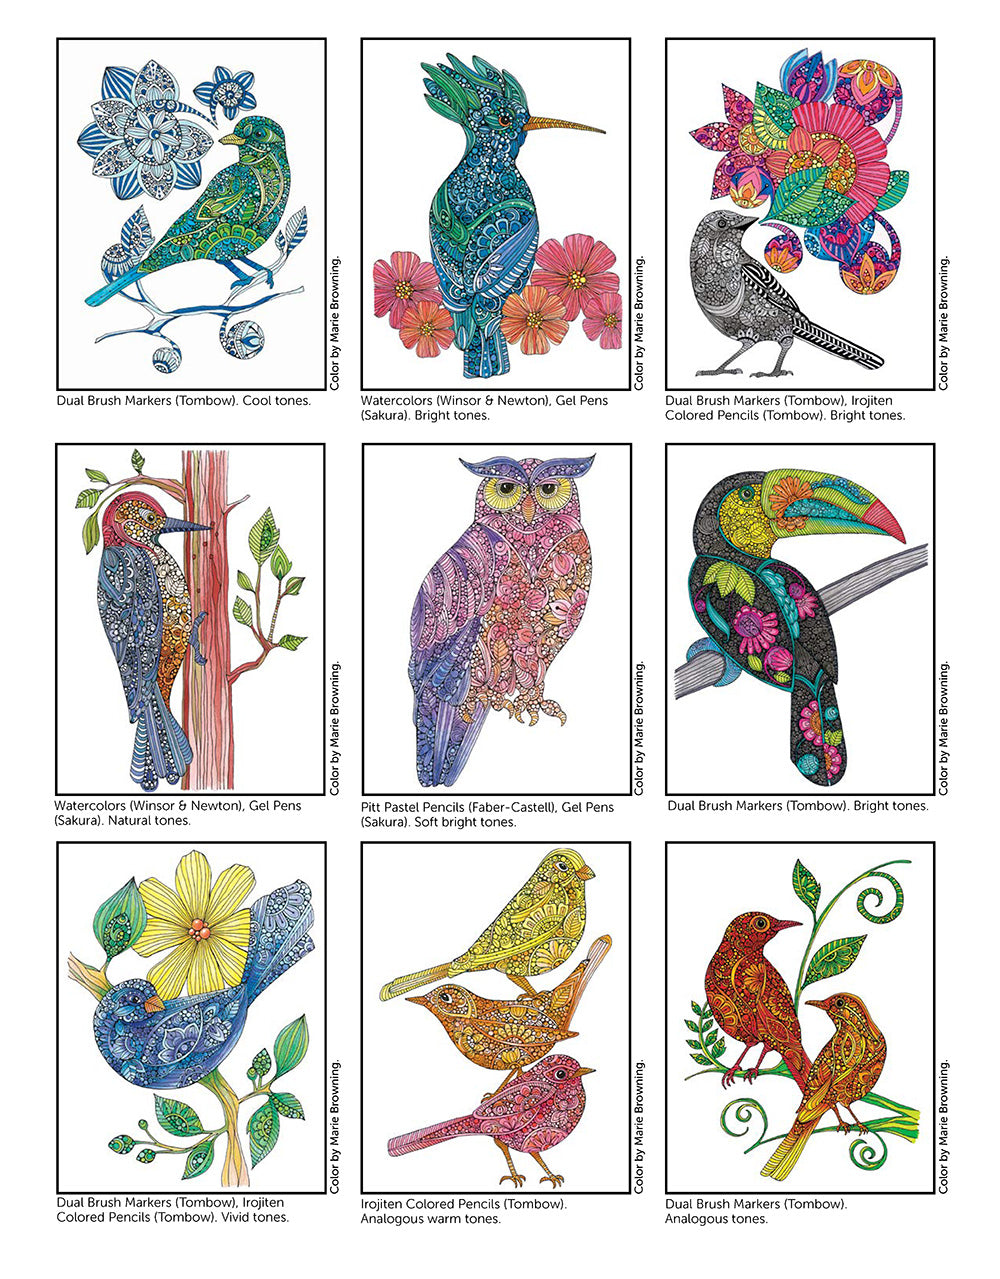 Creative Coloring Birds